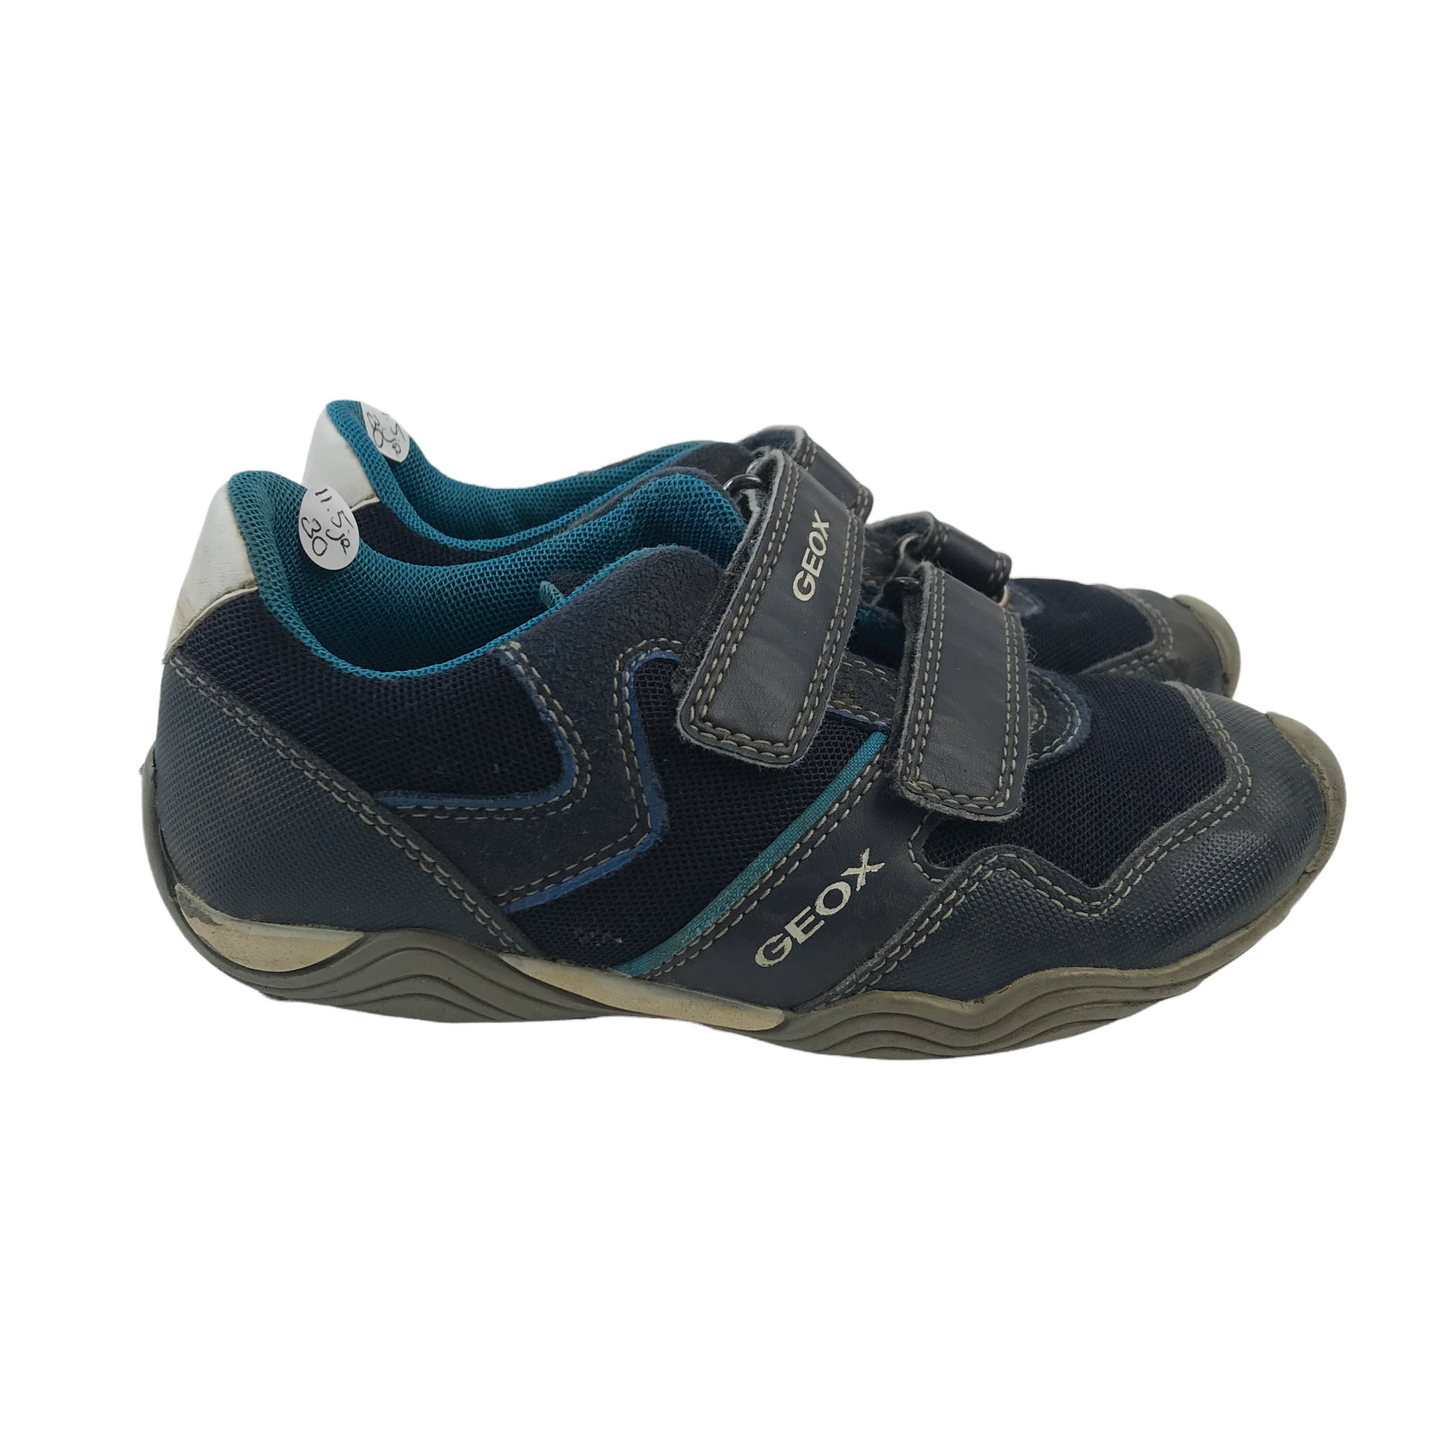 Geox Navy Blue Trainers Shoe Size 11.5 (jr)